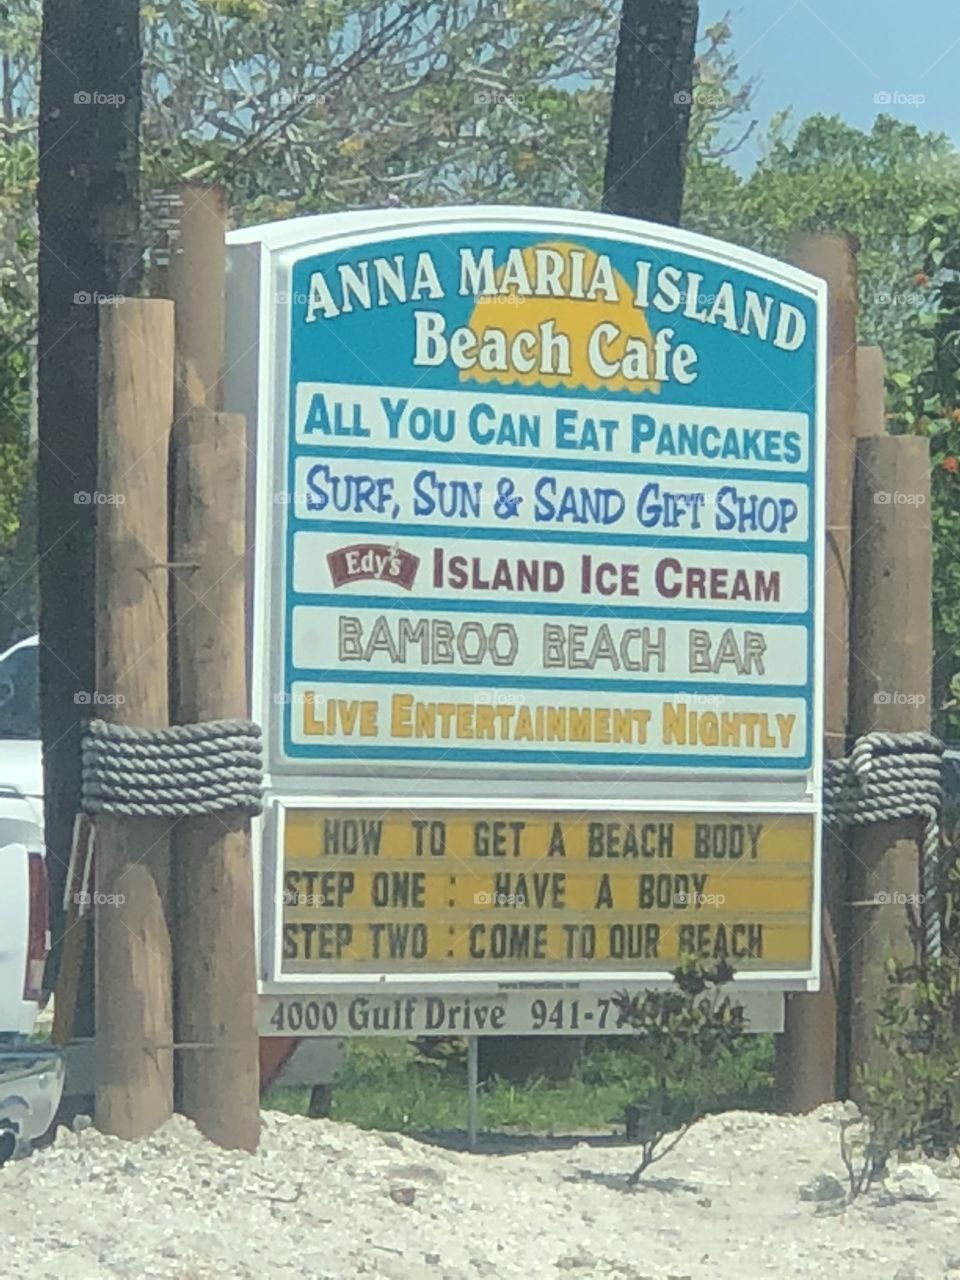 How to Have A Beach Body according to Anna Maria Island Beach Cafe. 